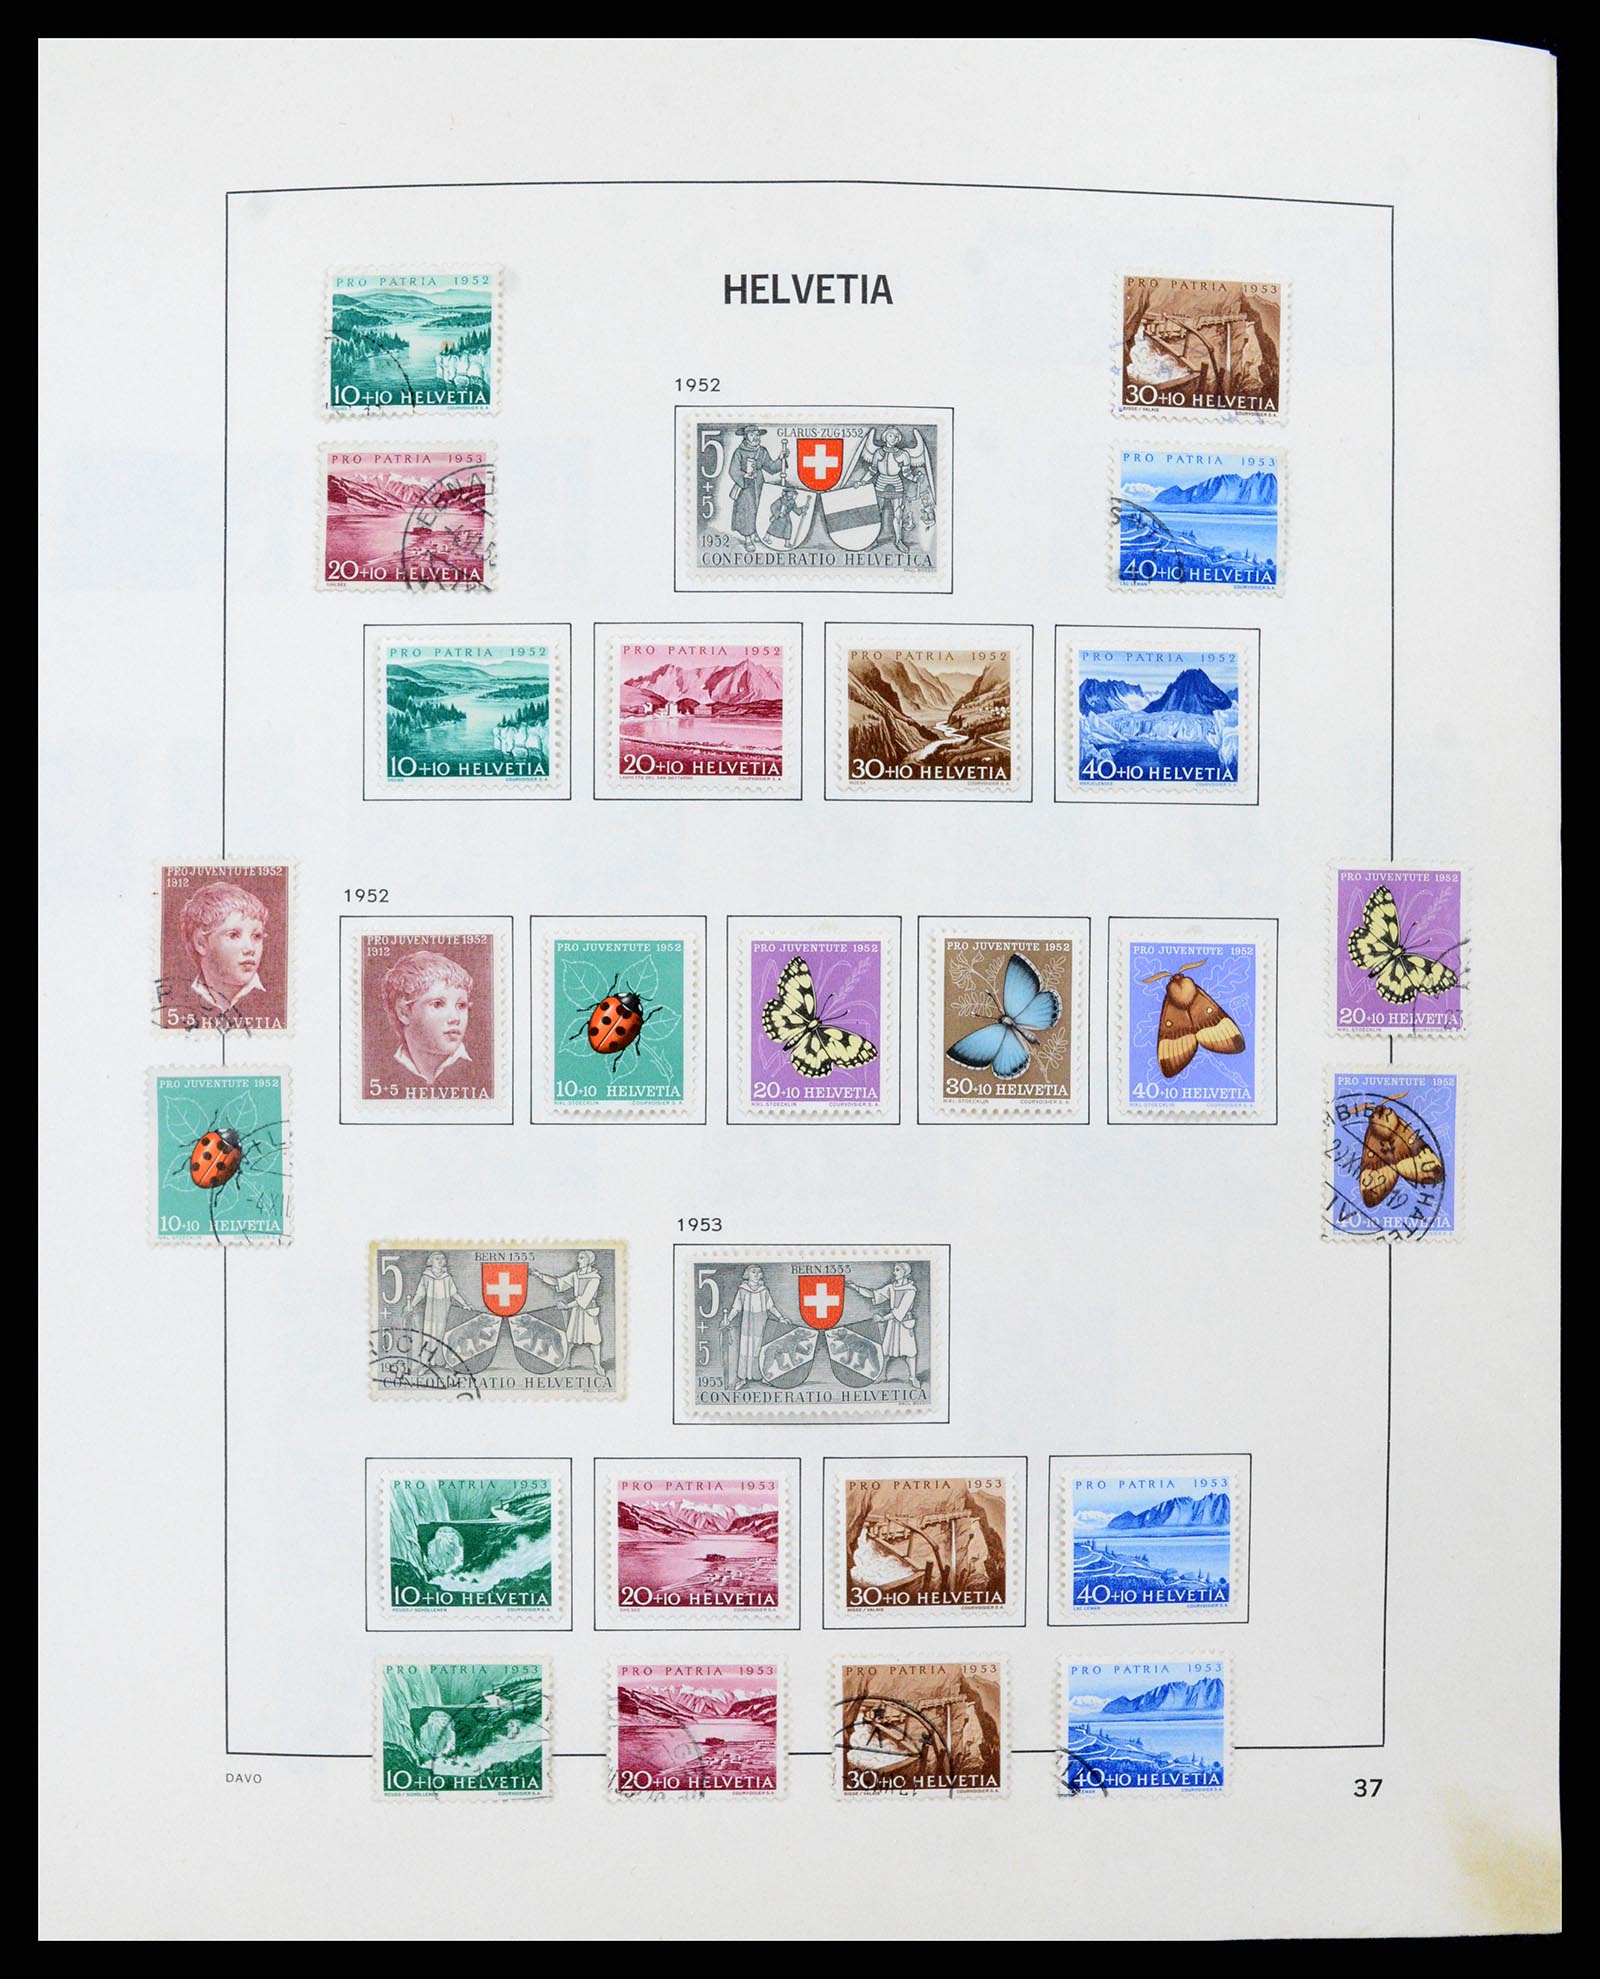 37496 036 - Stamp collection 37496 Switzerland 1854-2002.